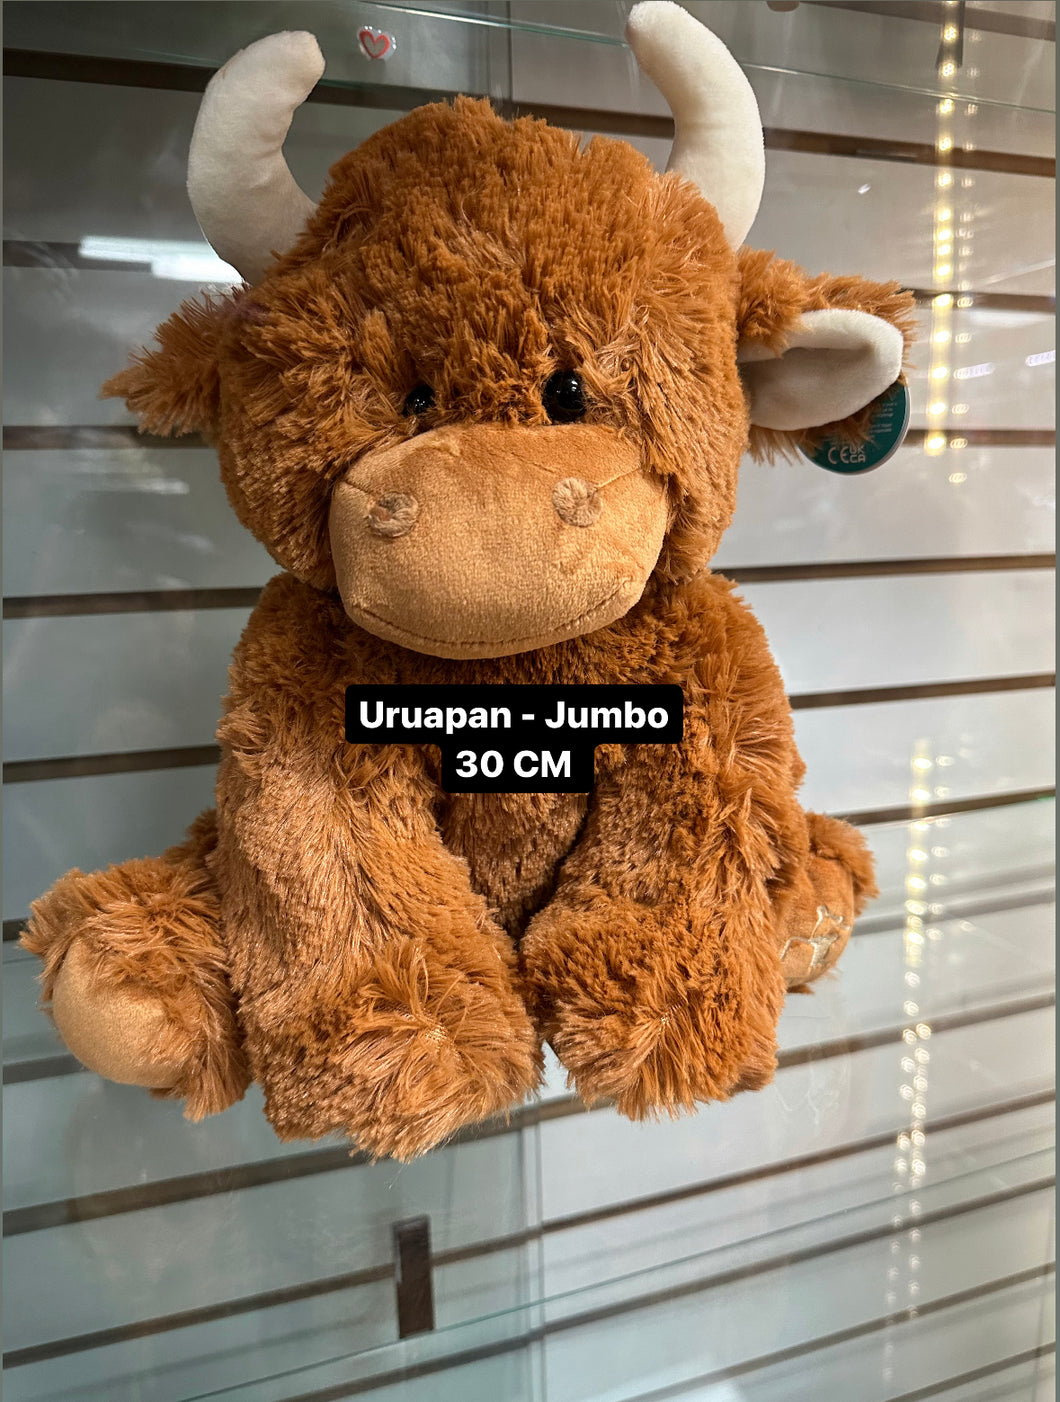 Uruapan (Jumbo) highland cow plush - Large